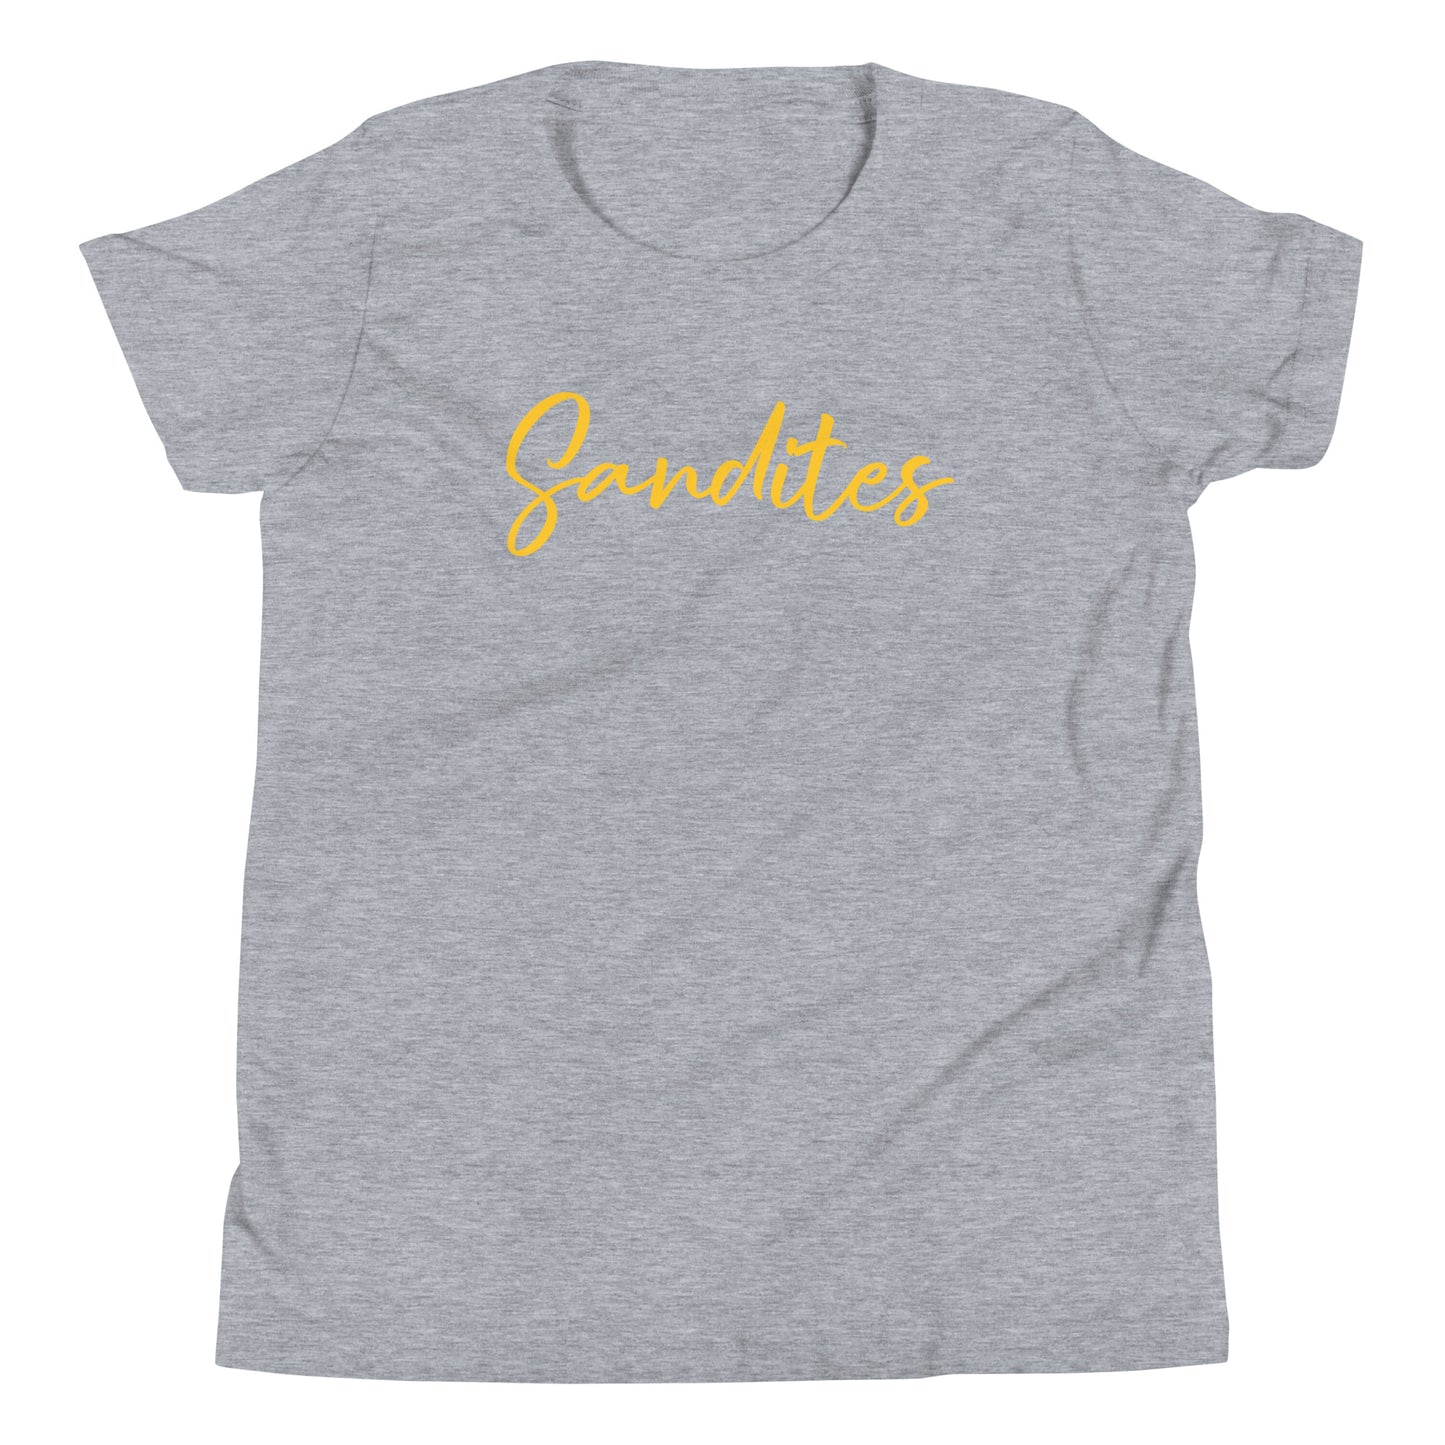 Sandites - Kids T-Shirt